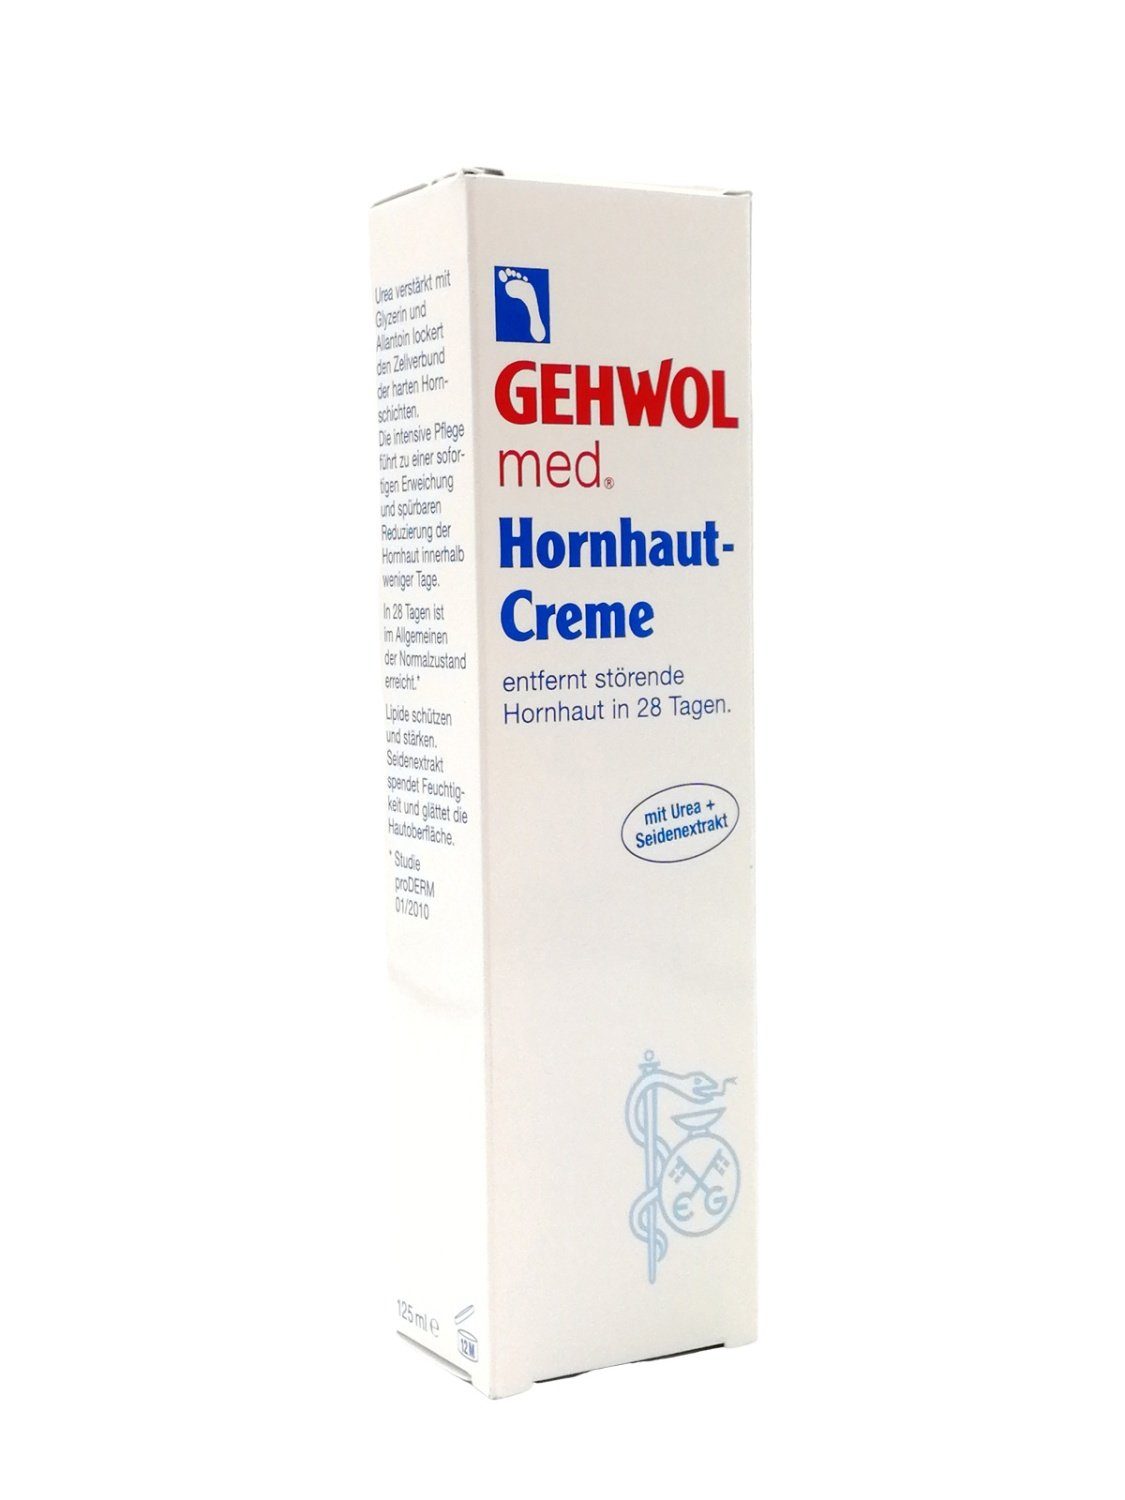 Eduard Gerlach GmbH Fußcreme GEHWOL MED Hornhaut Creme 125 ml